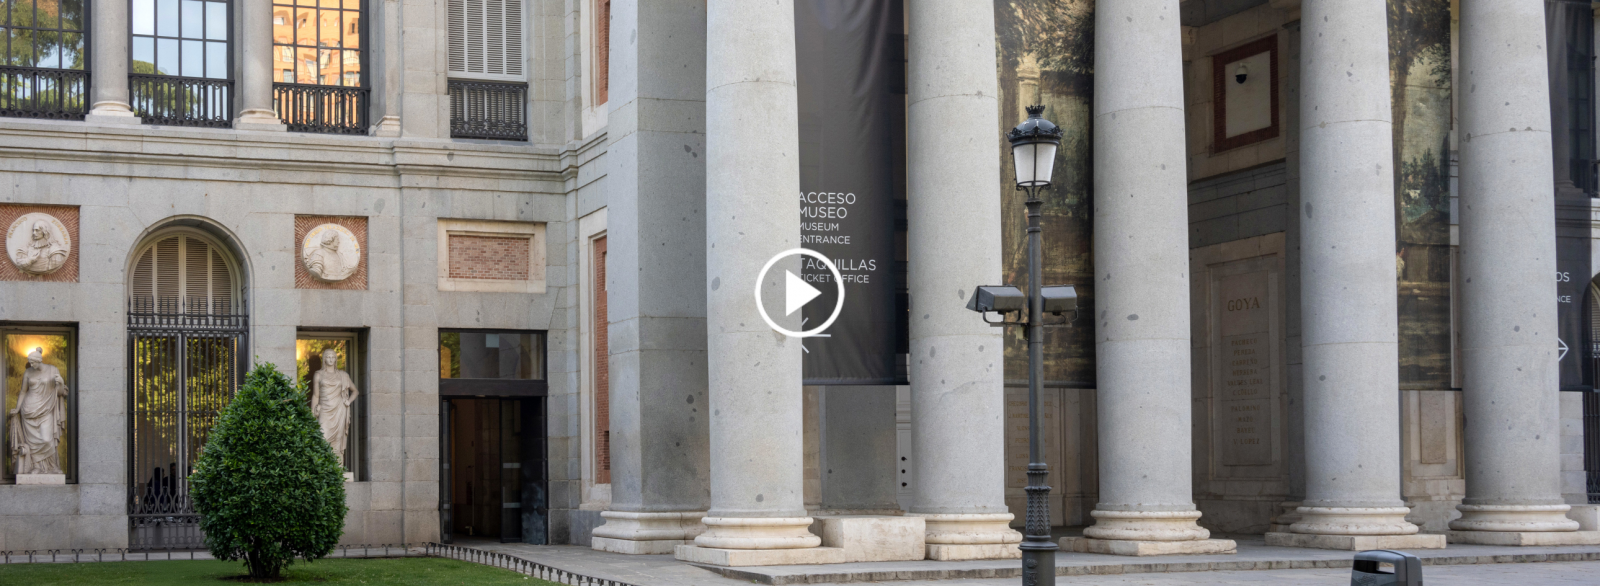 New Entrance for Friends of the Prado